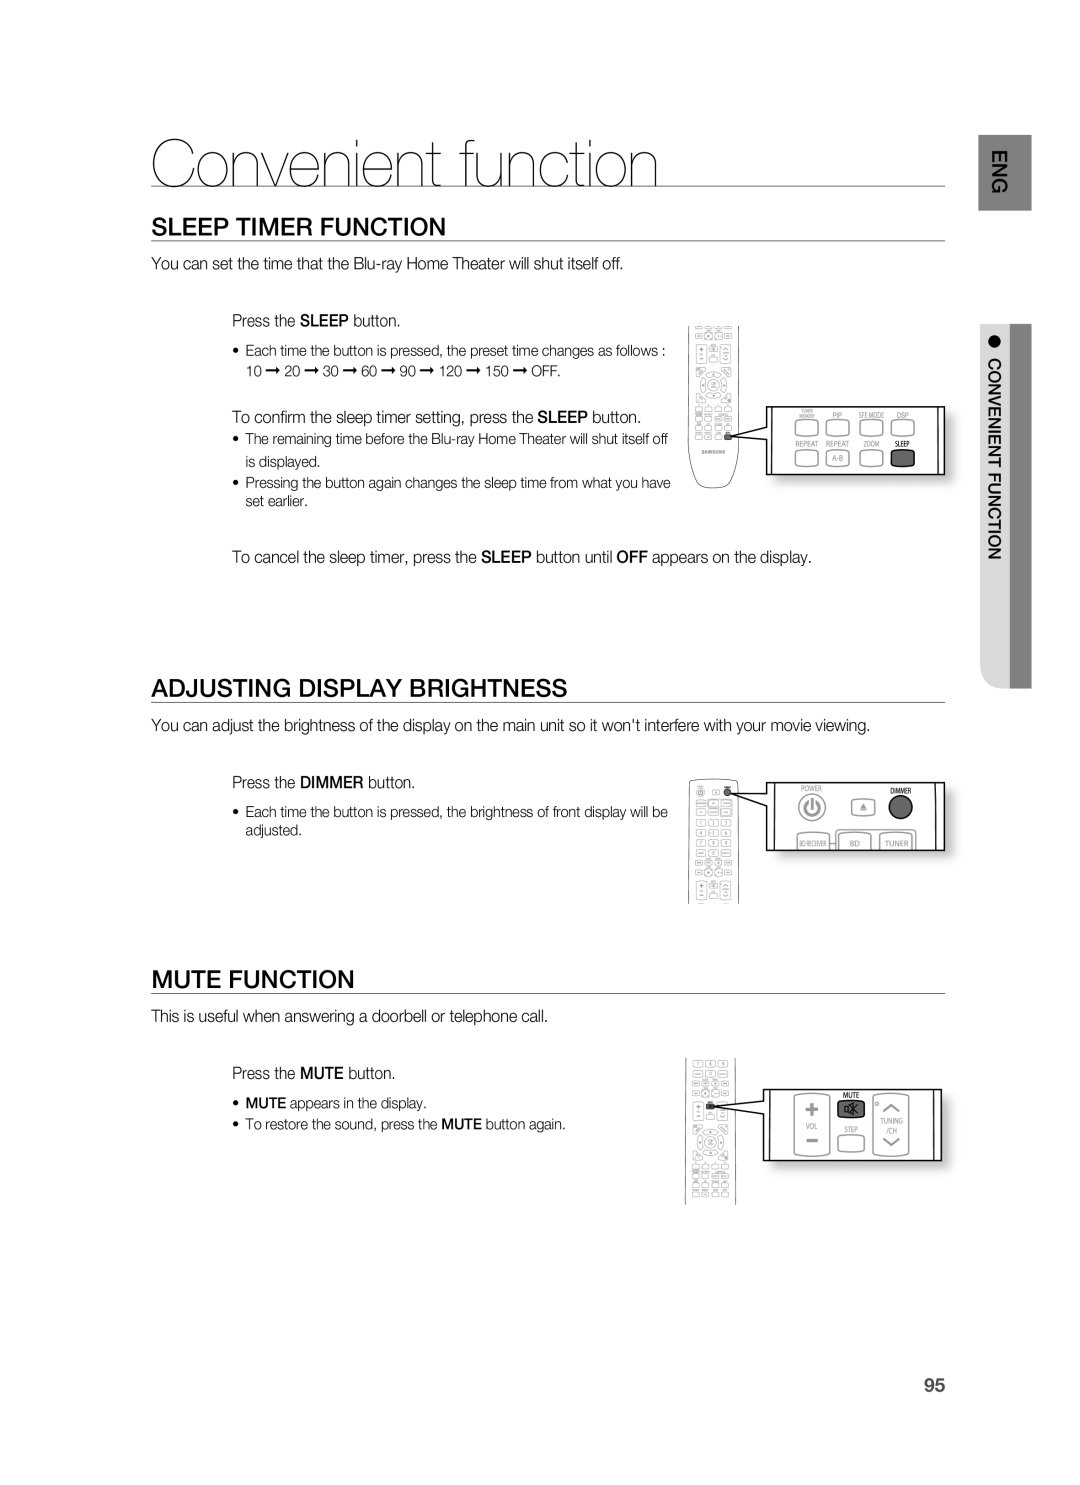 Samsung HT-BD3252 user manual Convenient function, Sleep Timer Function, Adjusting Display Brightness, Mute Function 